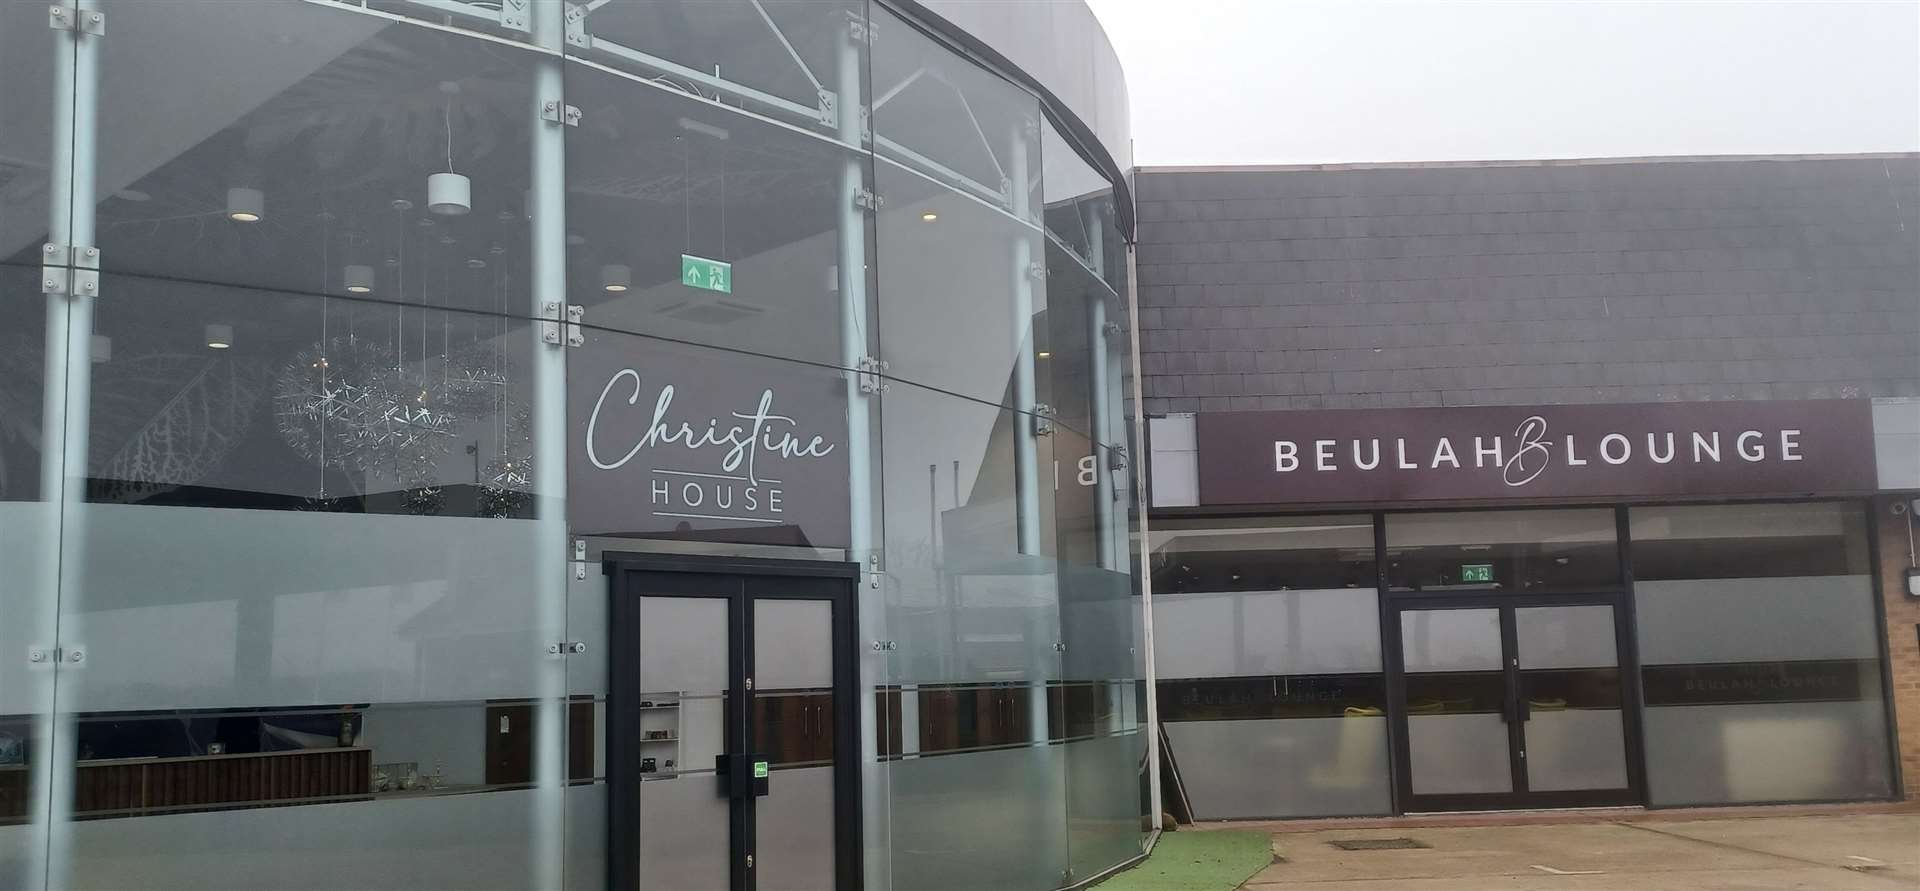 Christine House wedding venue has opened just outside Rainham